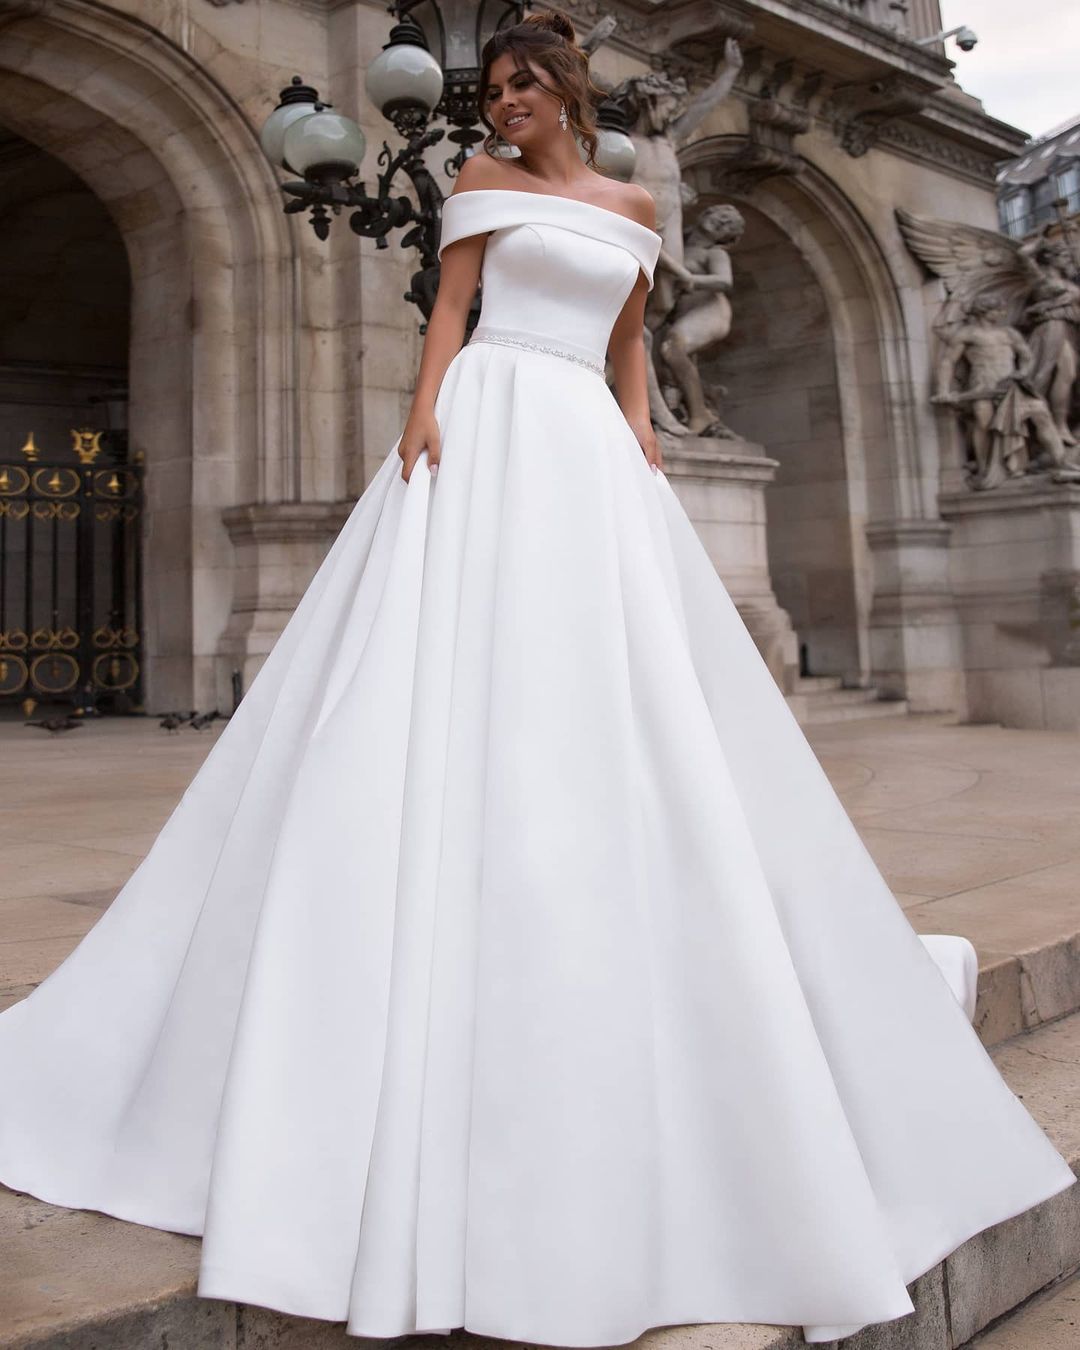 Classic but Fabulous 2021 wedding dresses. | MÉLÒDÝ JACÒB